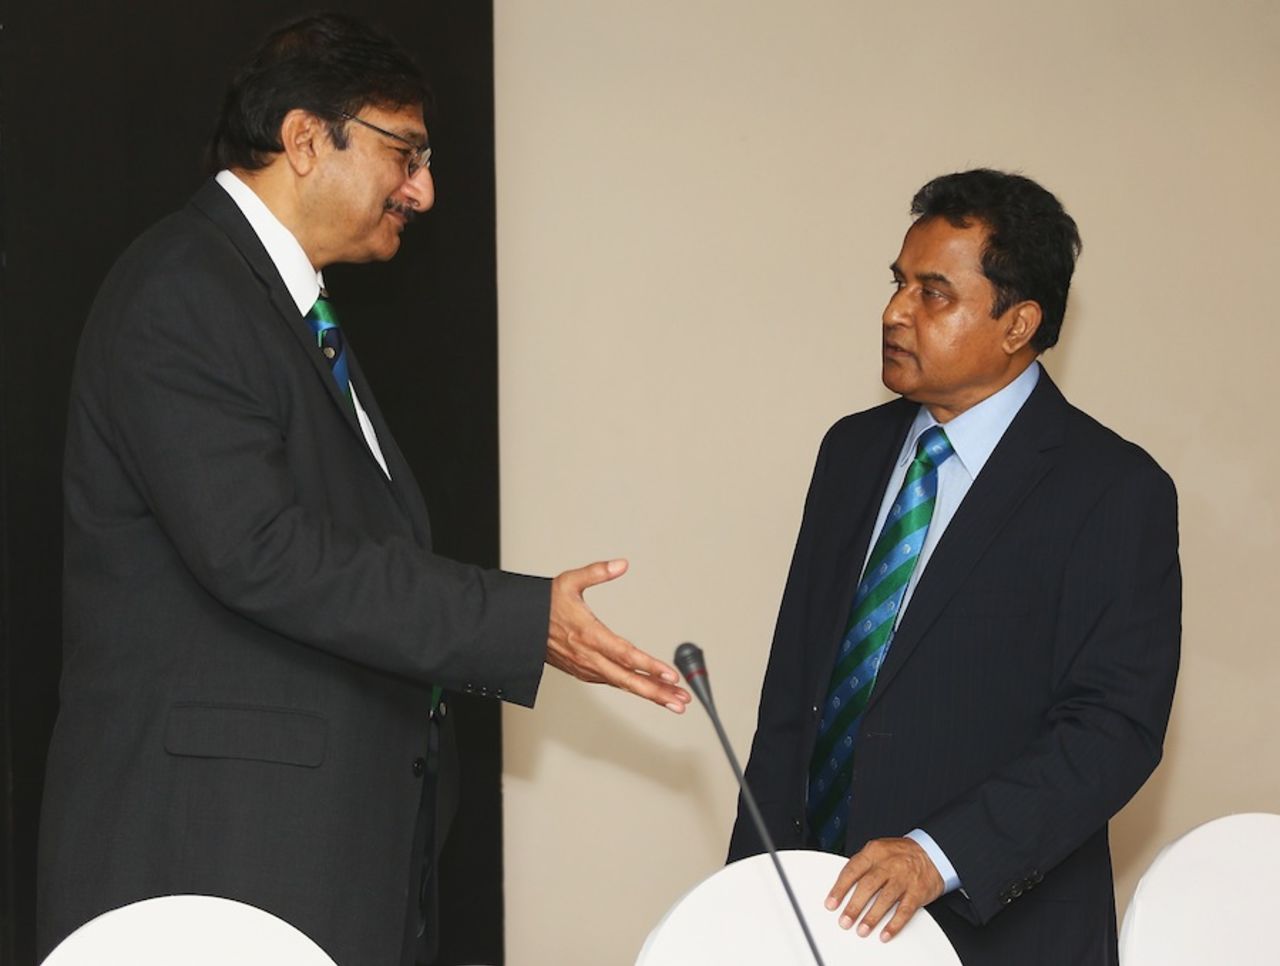 PCB's Zaka Ashraf in discussion with BCB's Mustafa Kamal, Colombo, October 9, 2012